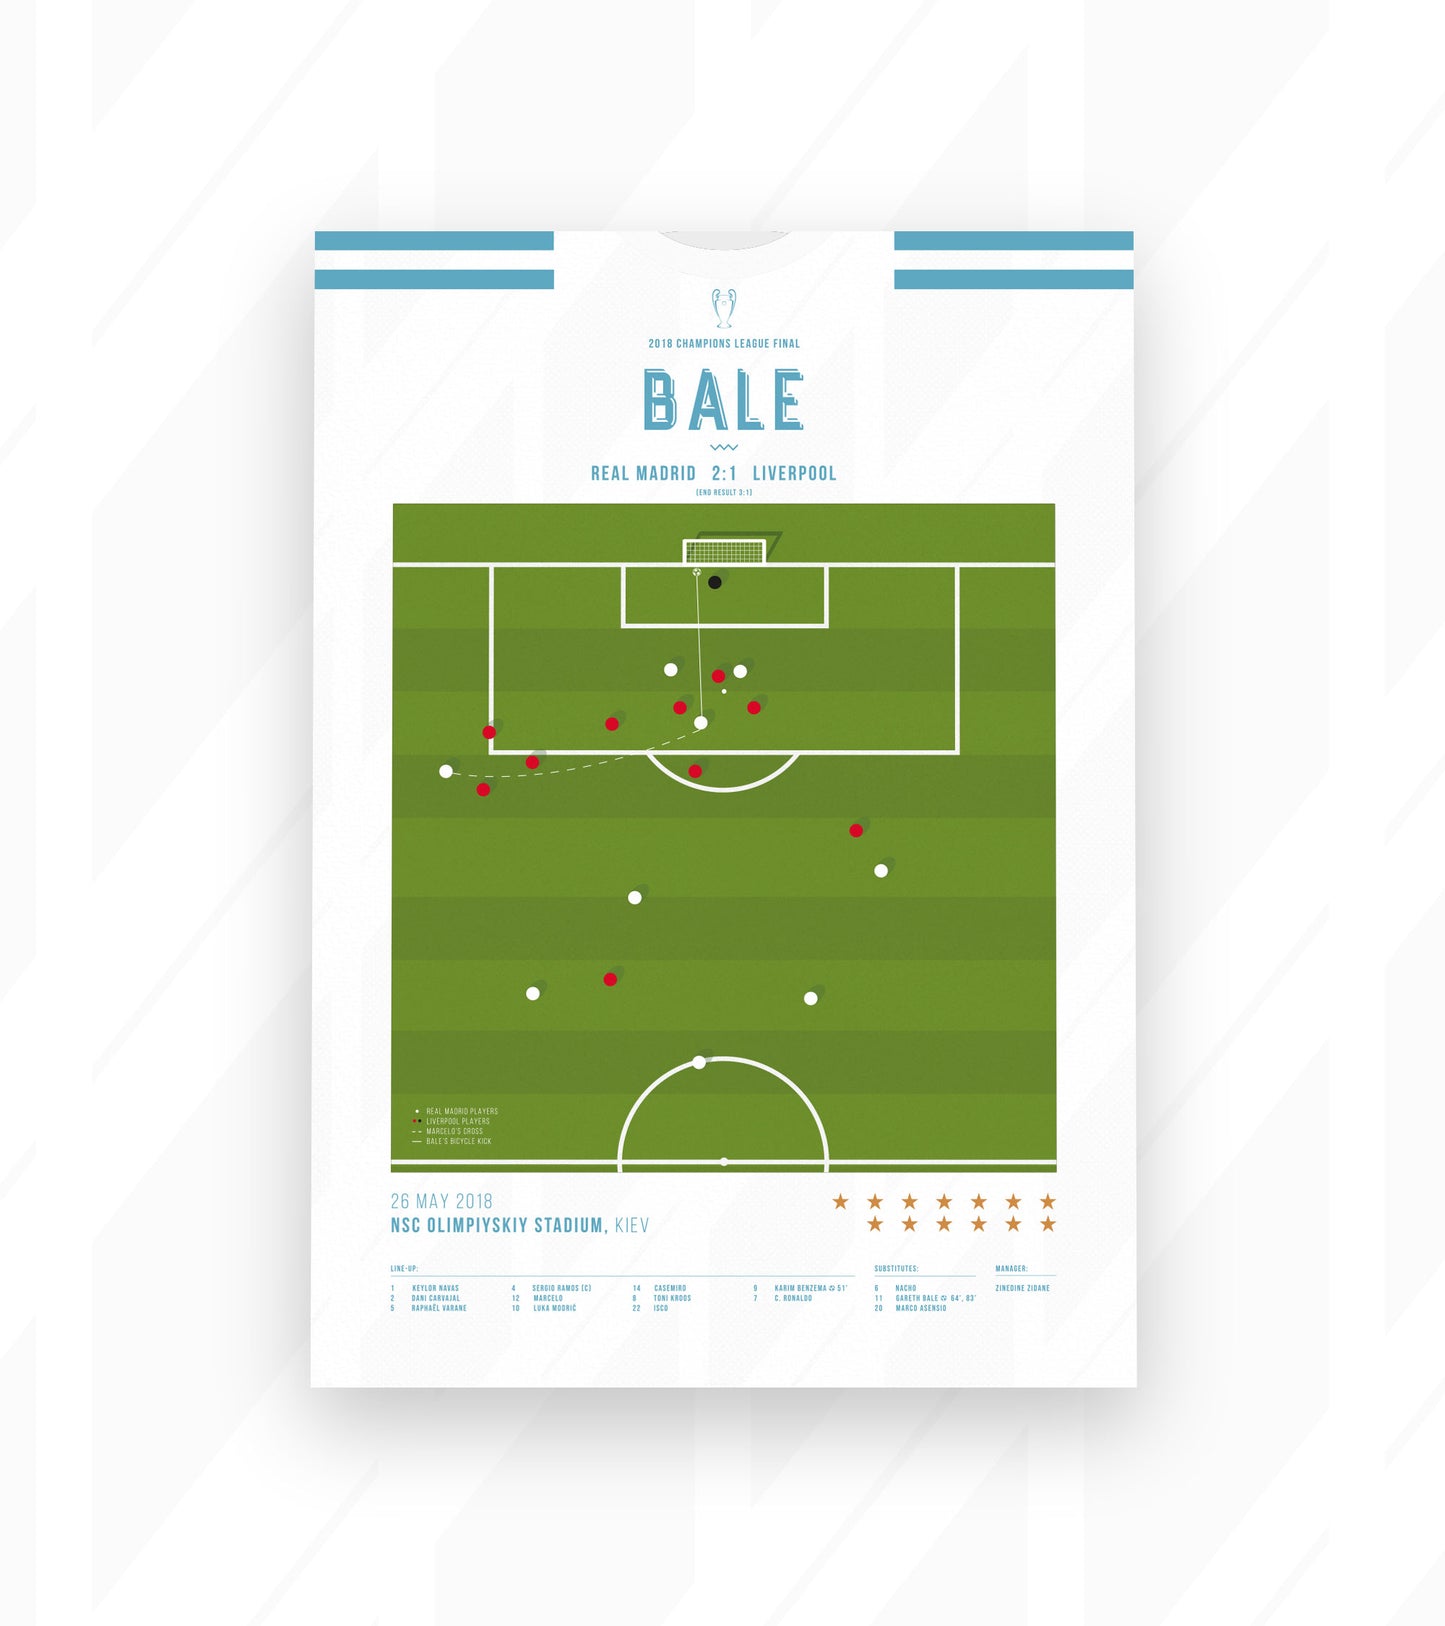 Gareth Bale 'galáctico' goal in the Champions League final